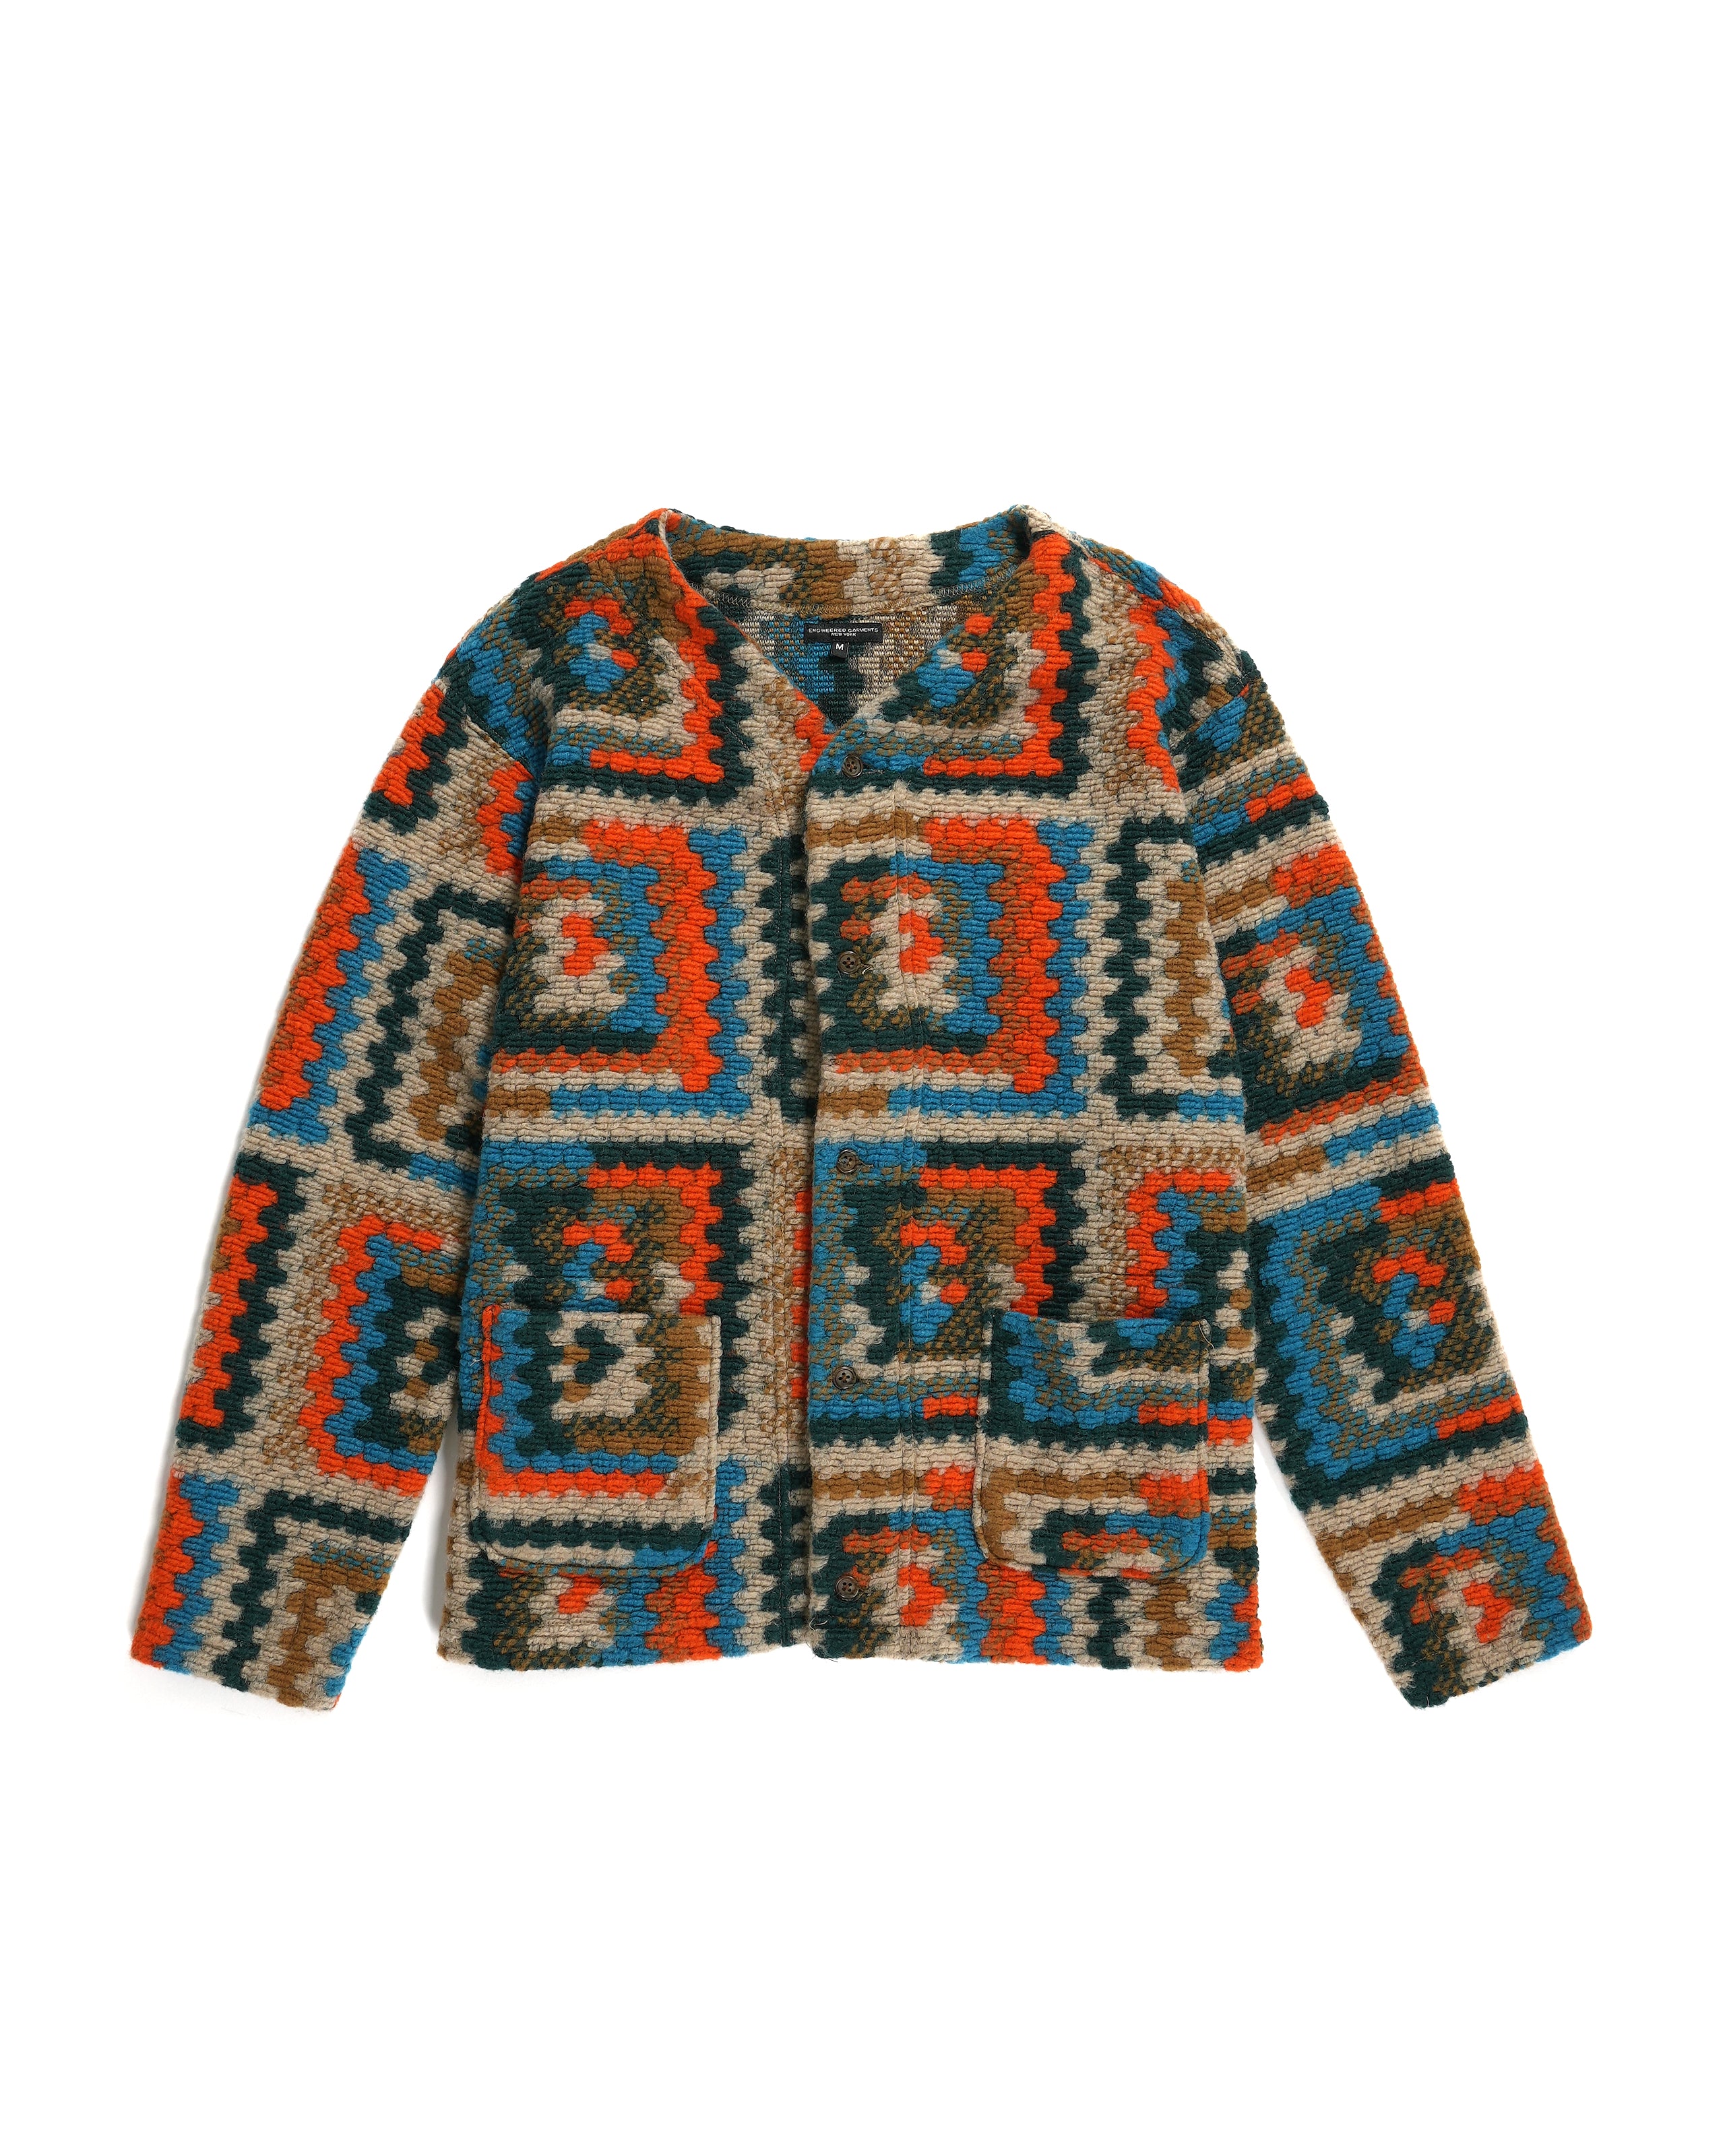 Knit Cardigan - Multi Color Poly Wool Crochet